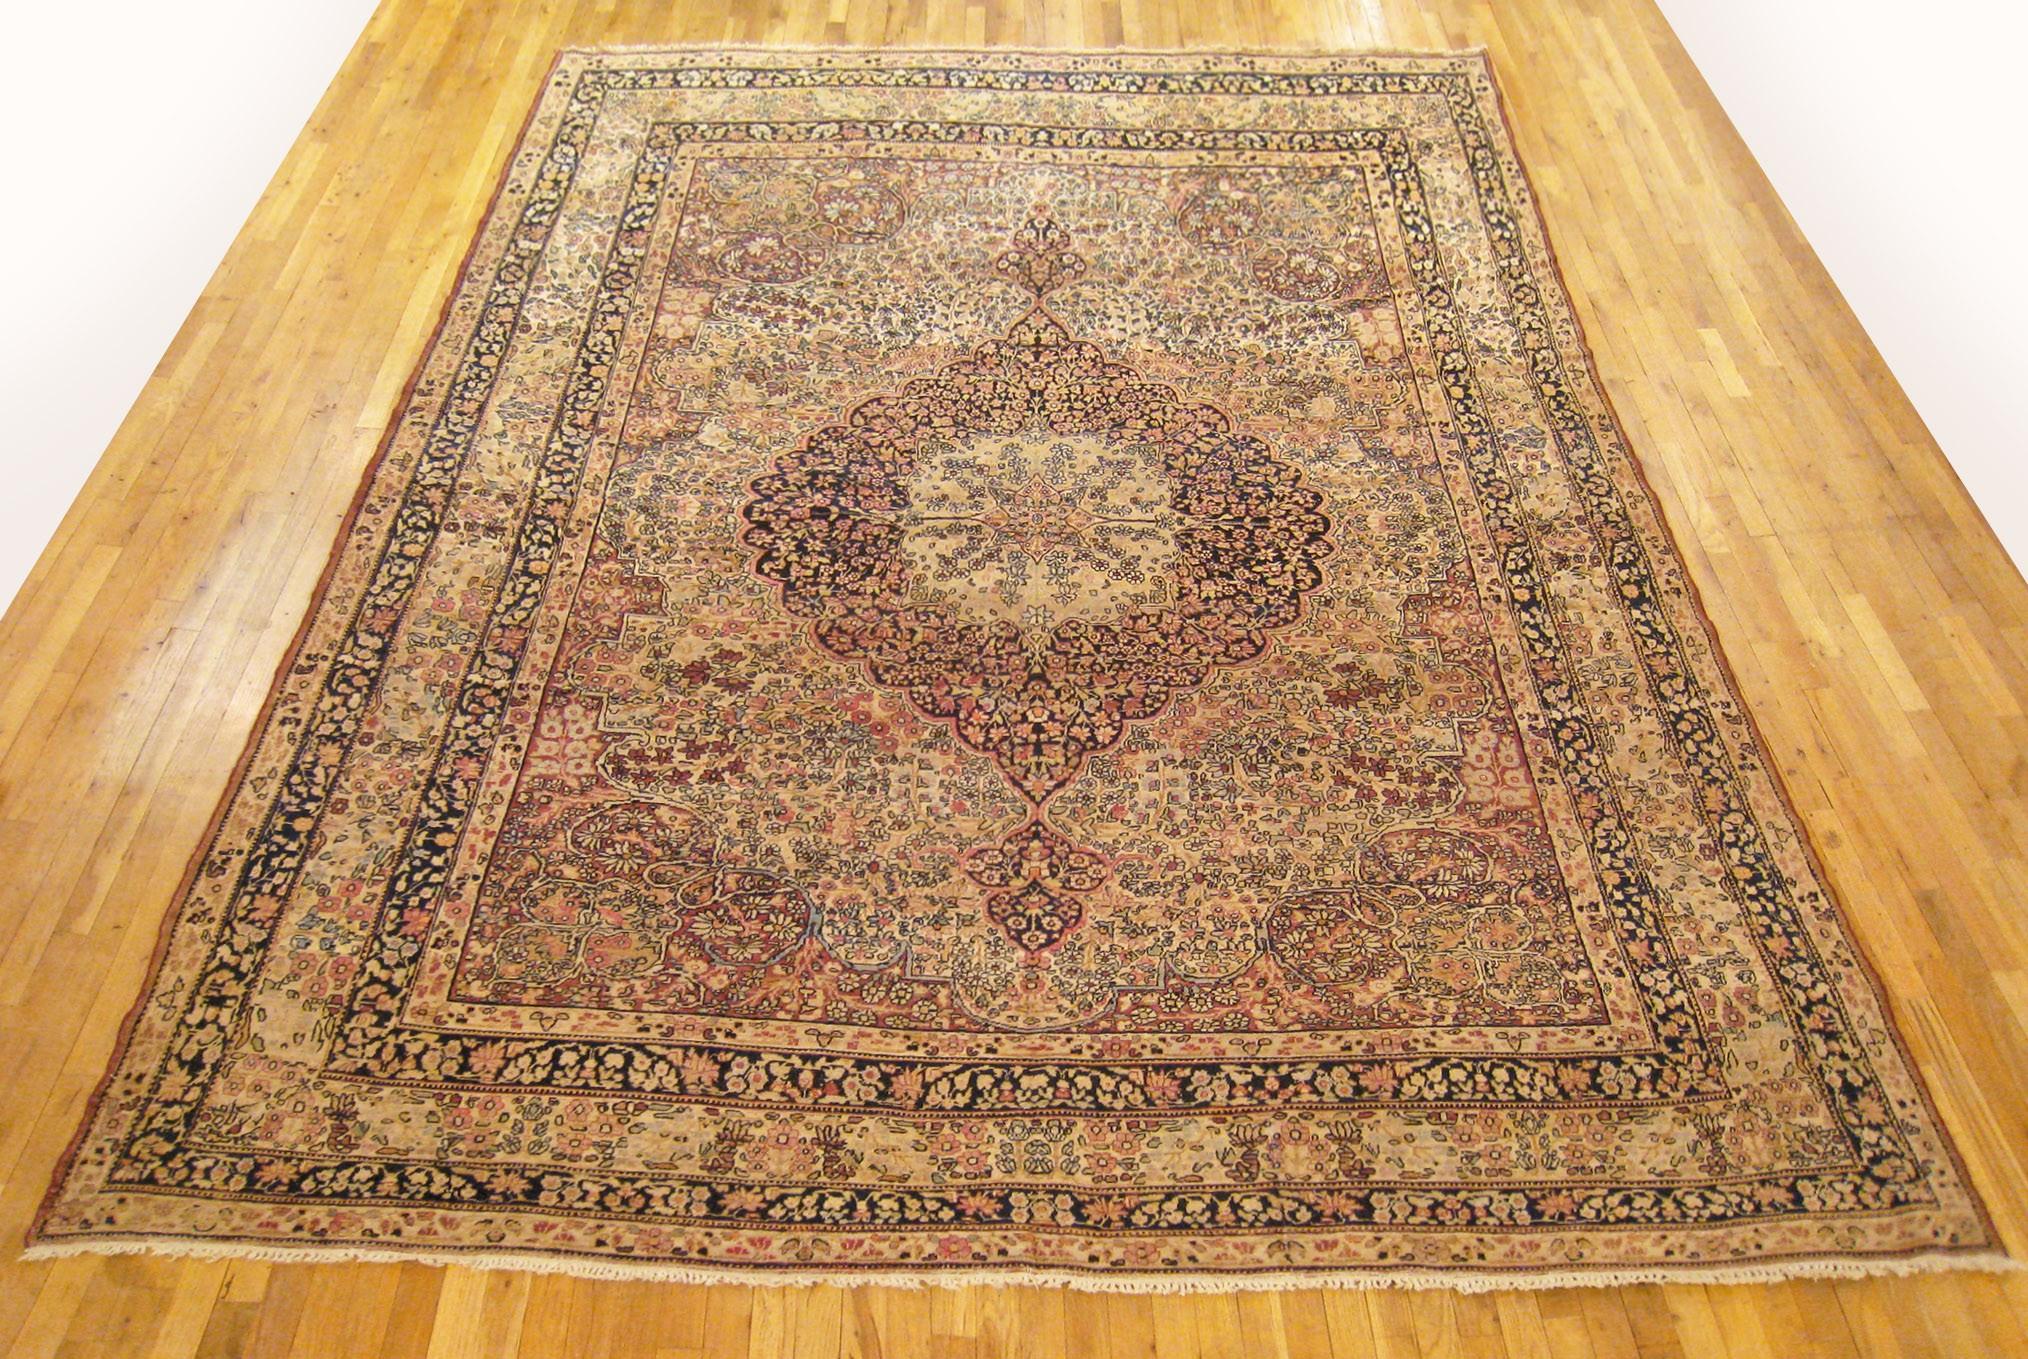 Antique Persian Lavar Oriental Carpet, Roon Size, circa 1890

An antique Persian Lavar oriental carpet, size: 13'0